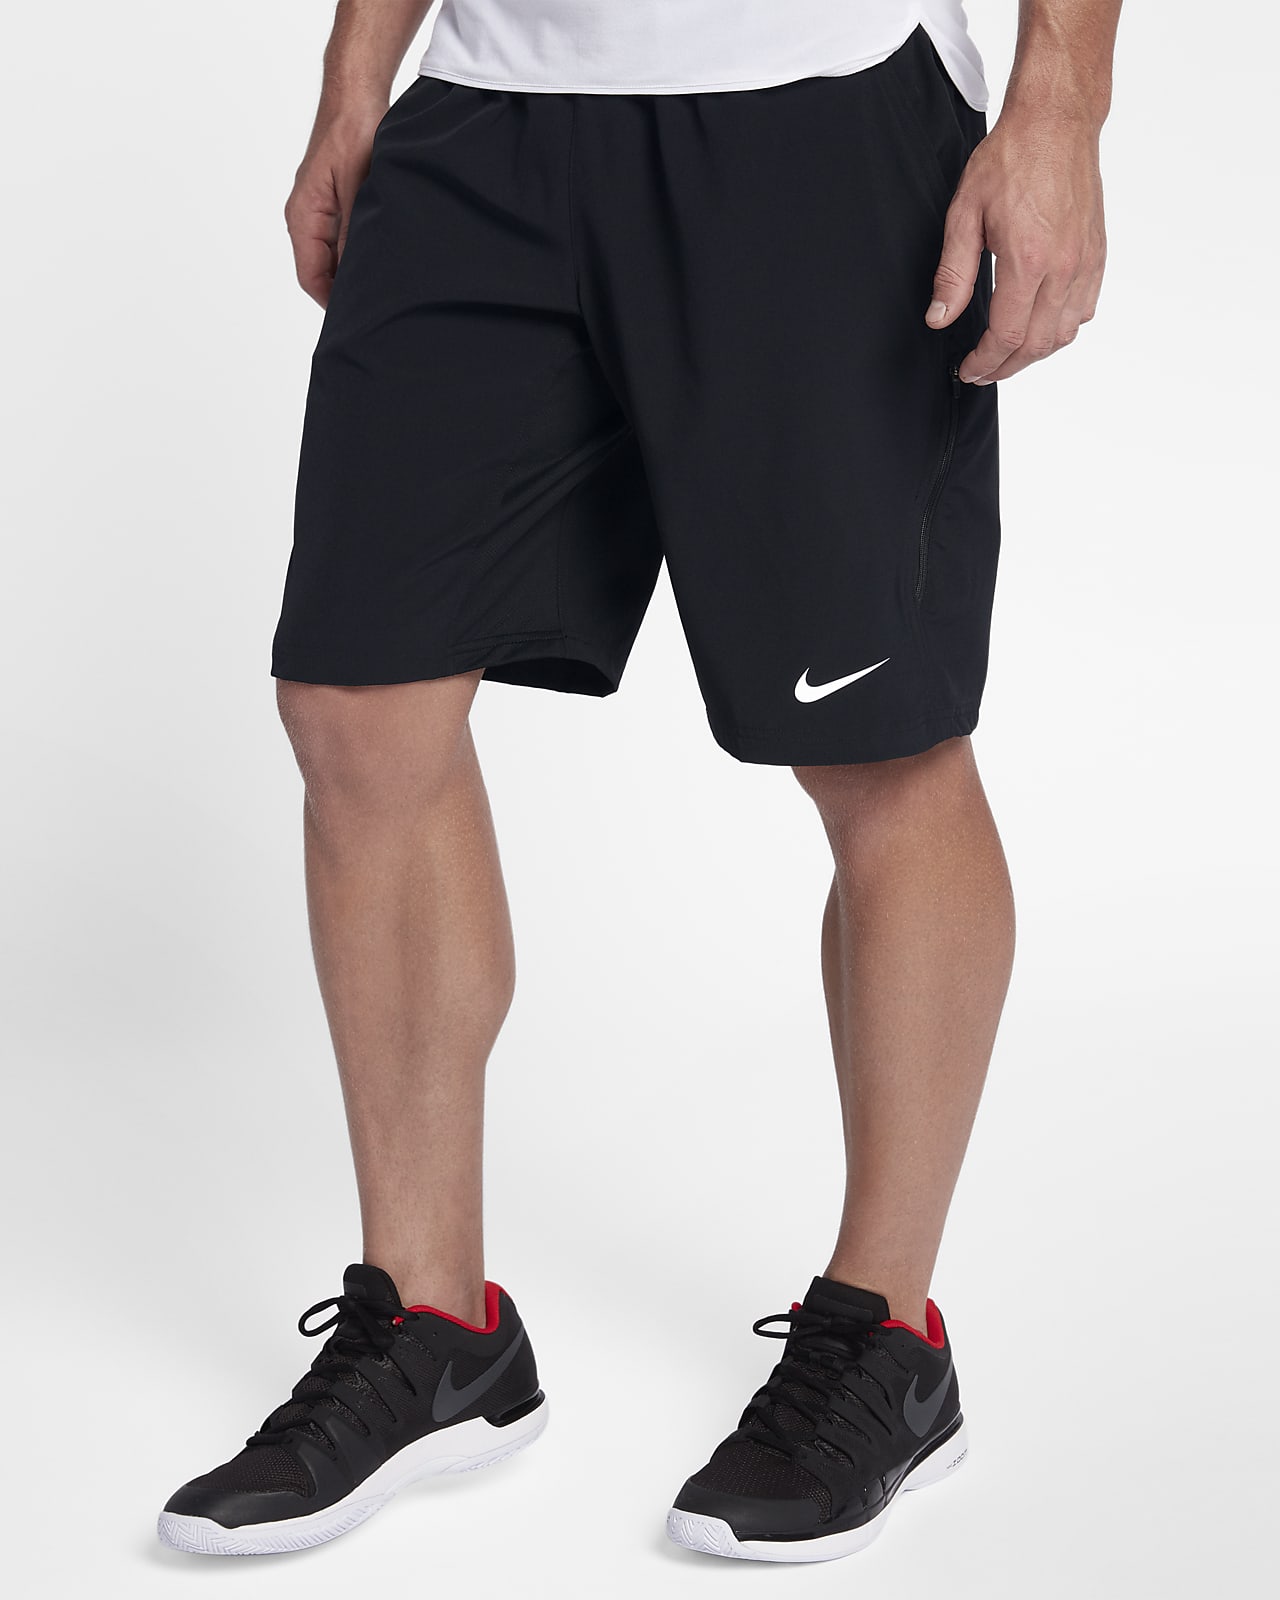 NikeCourt Flex Men's 11 Tennis Shorts